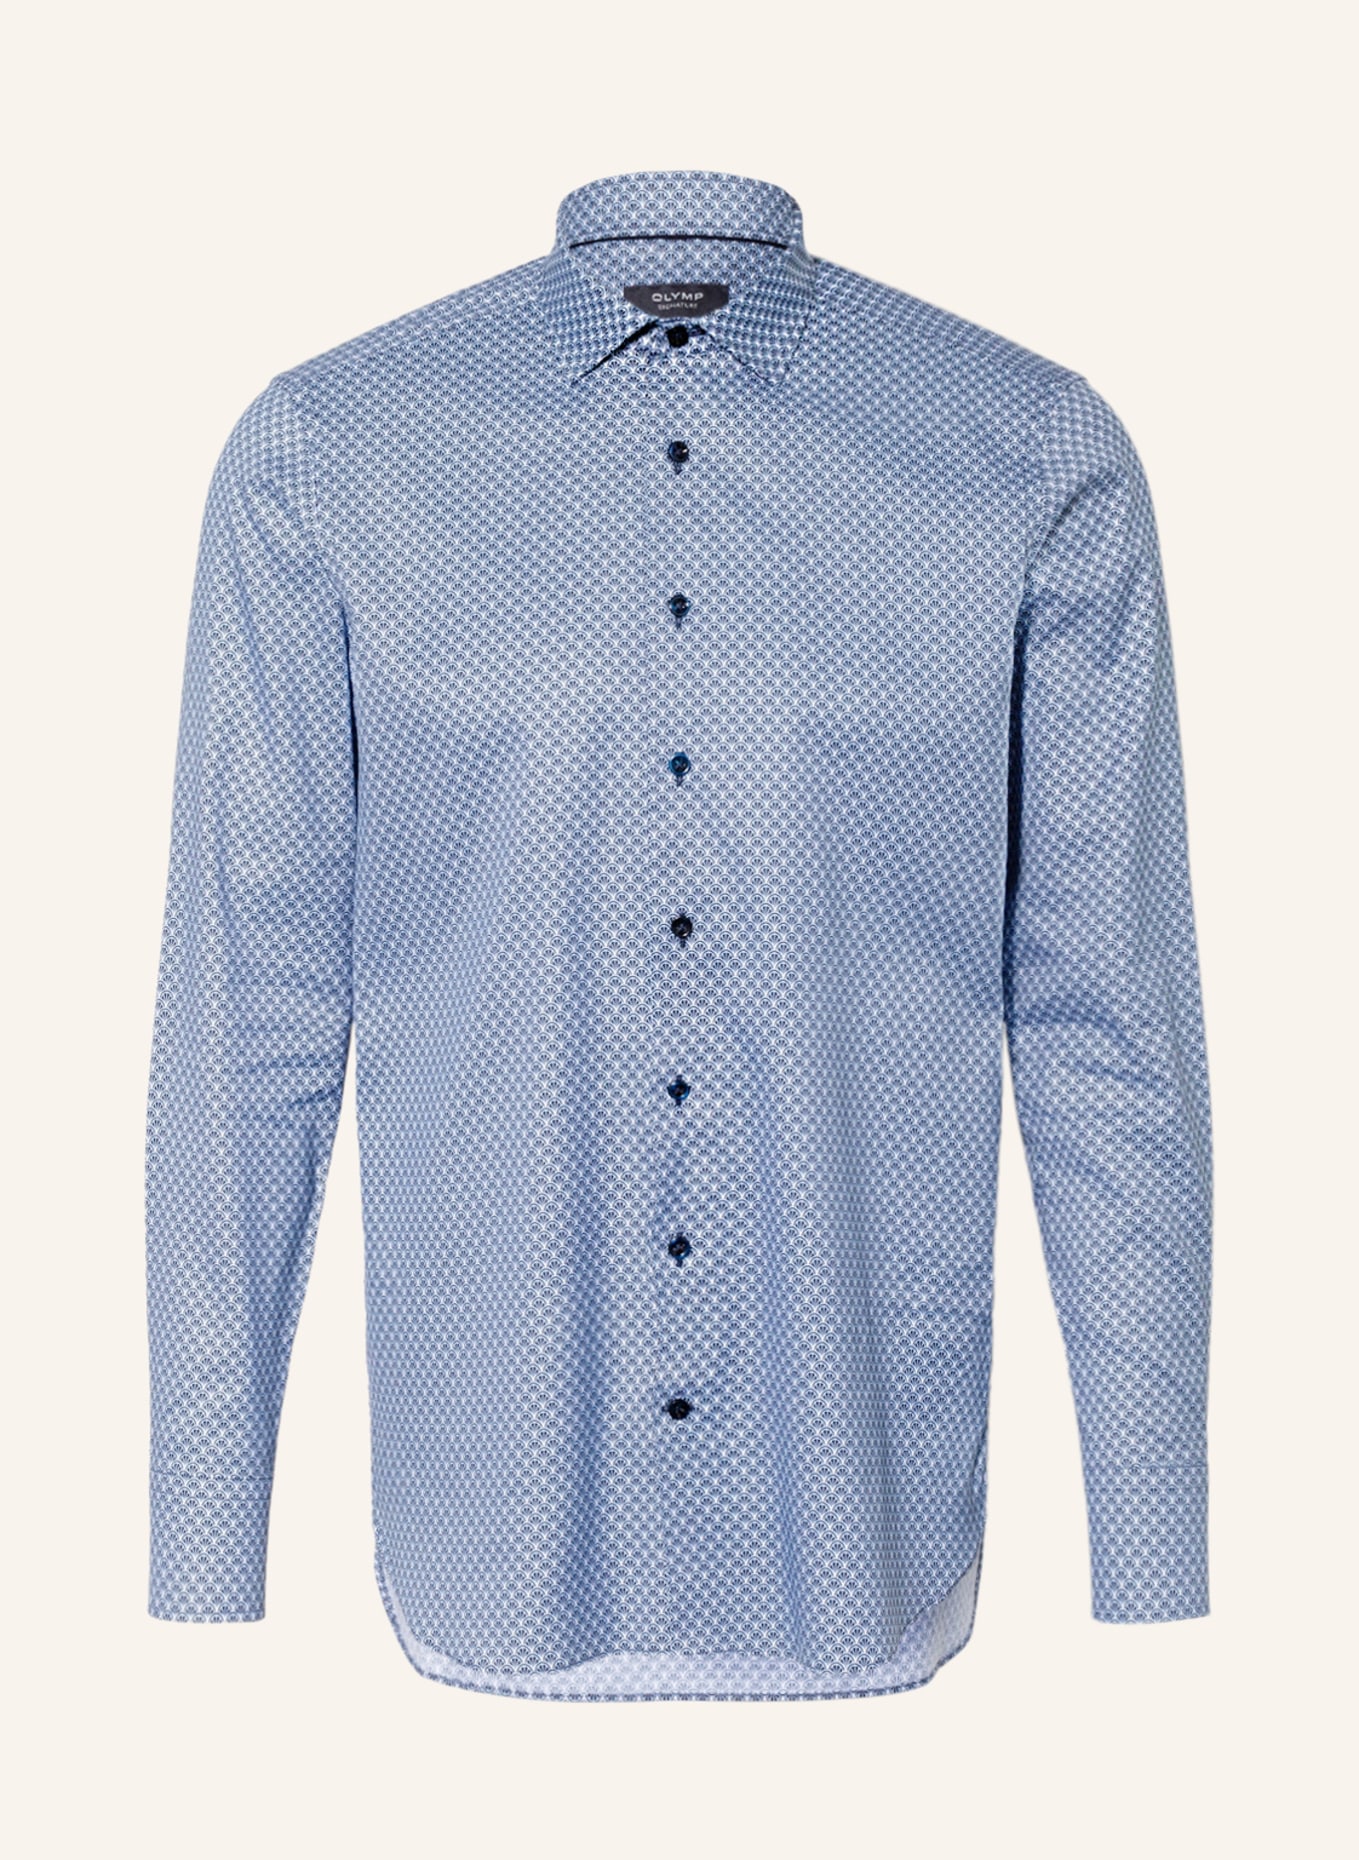 OLYMP SIGNATURE Hemd tailored fit dunkelblau blau/ in